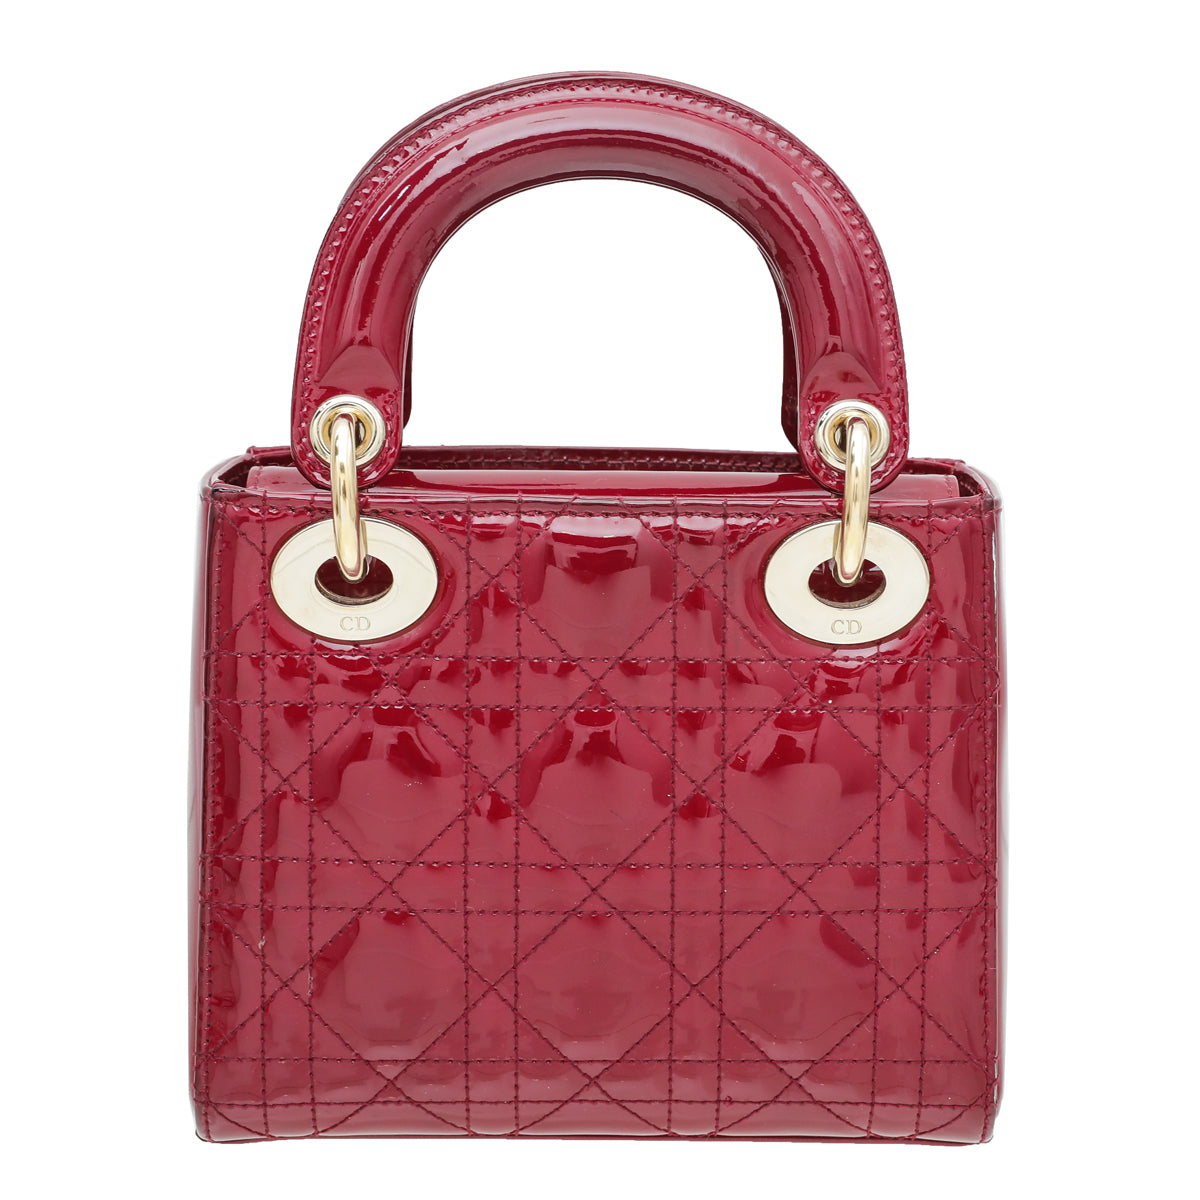 Preloved Vintage Christian Dior Red Leather Mini Lady Dior Bag 17BO0176 060923 Off